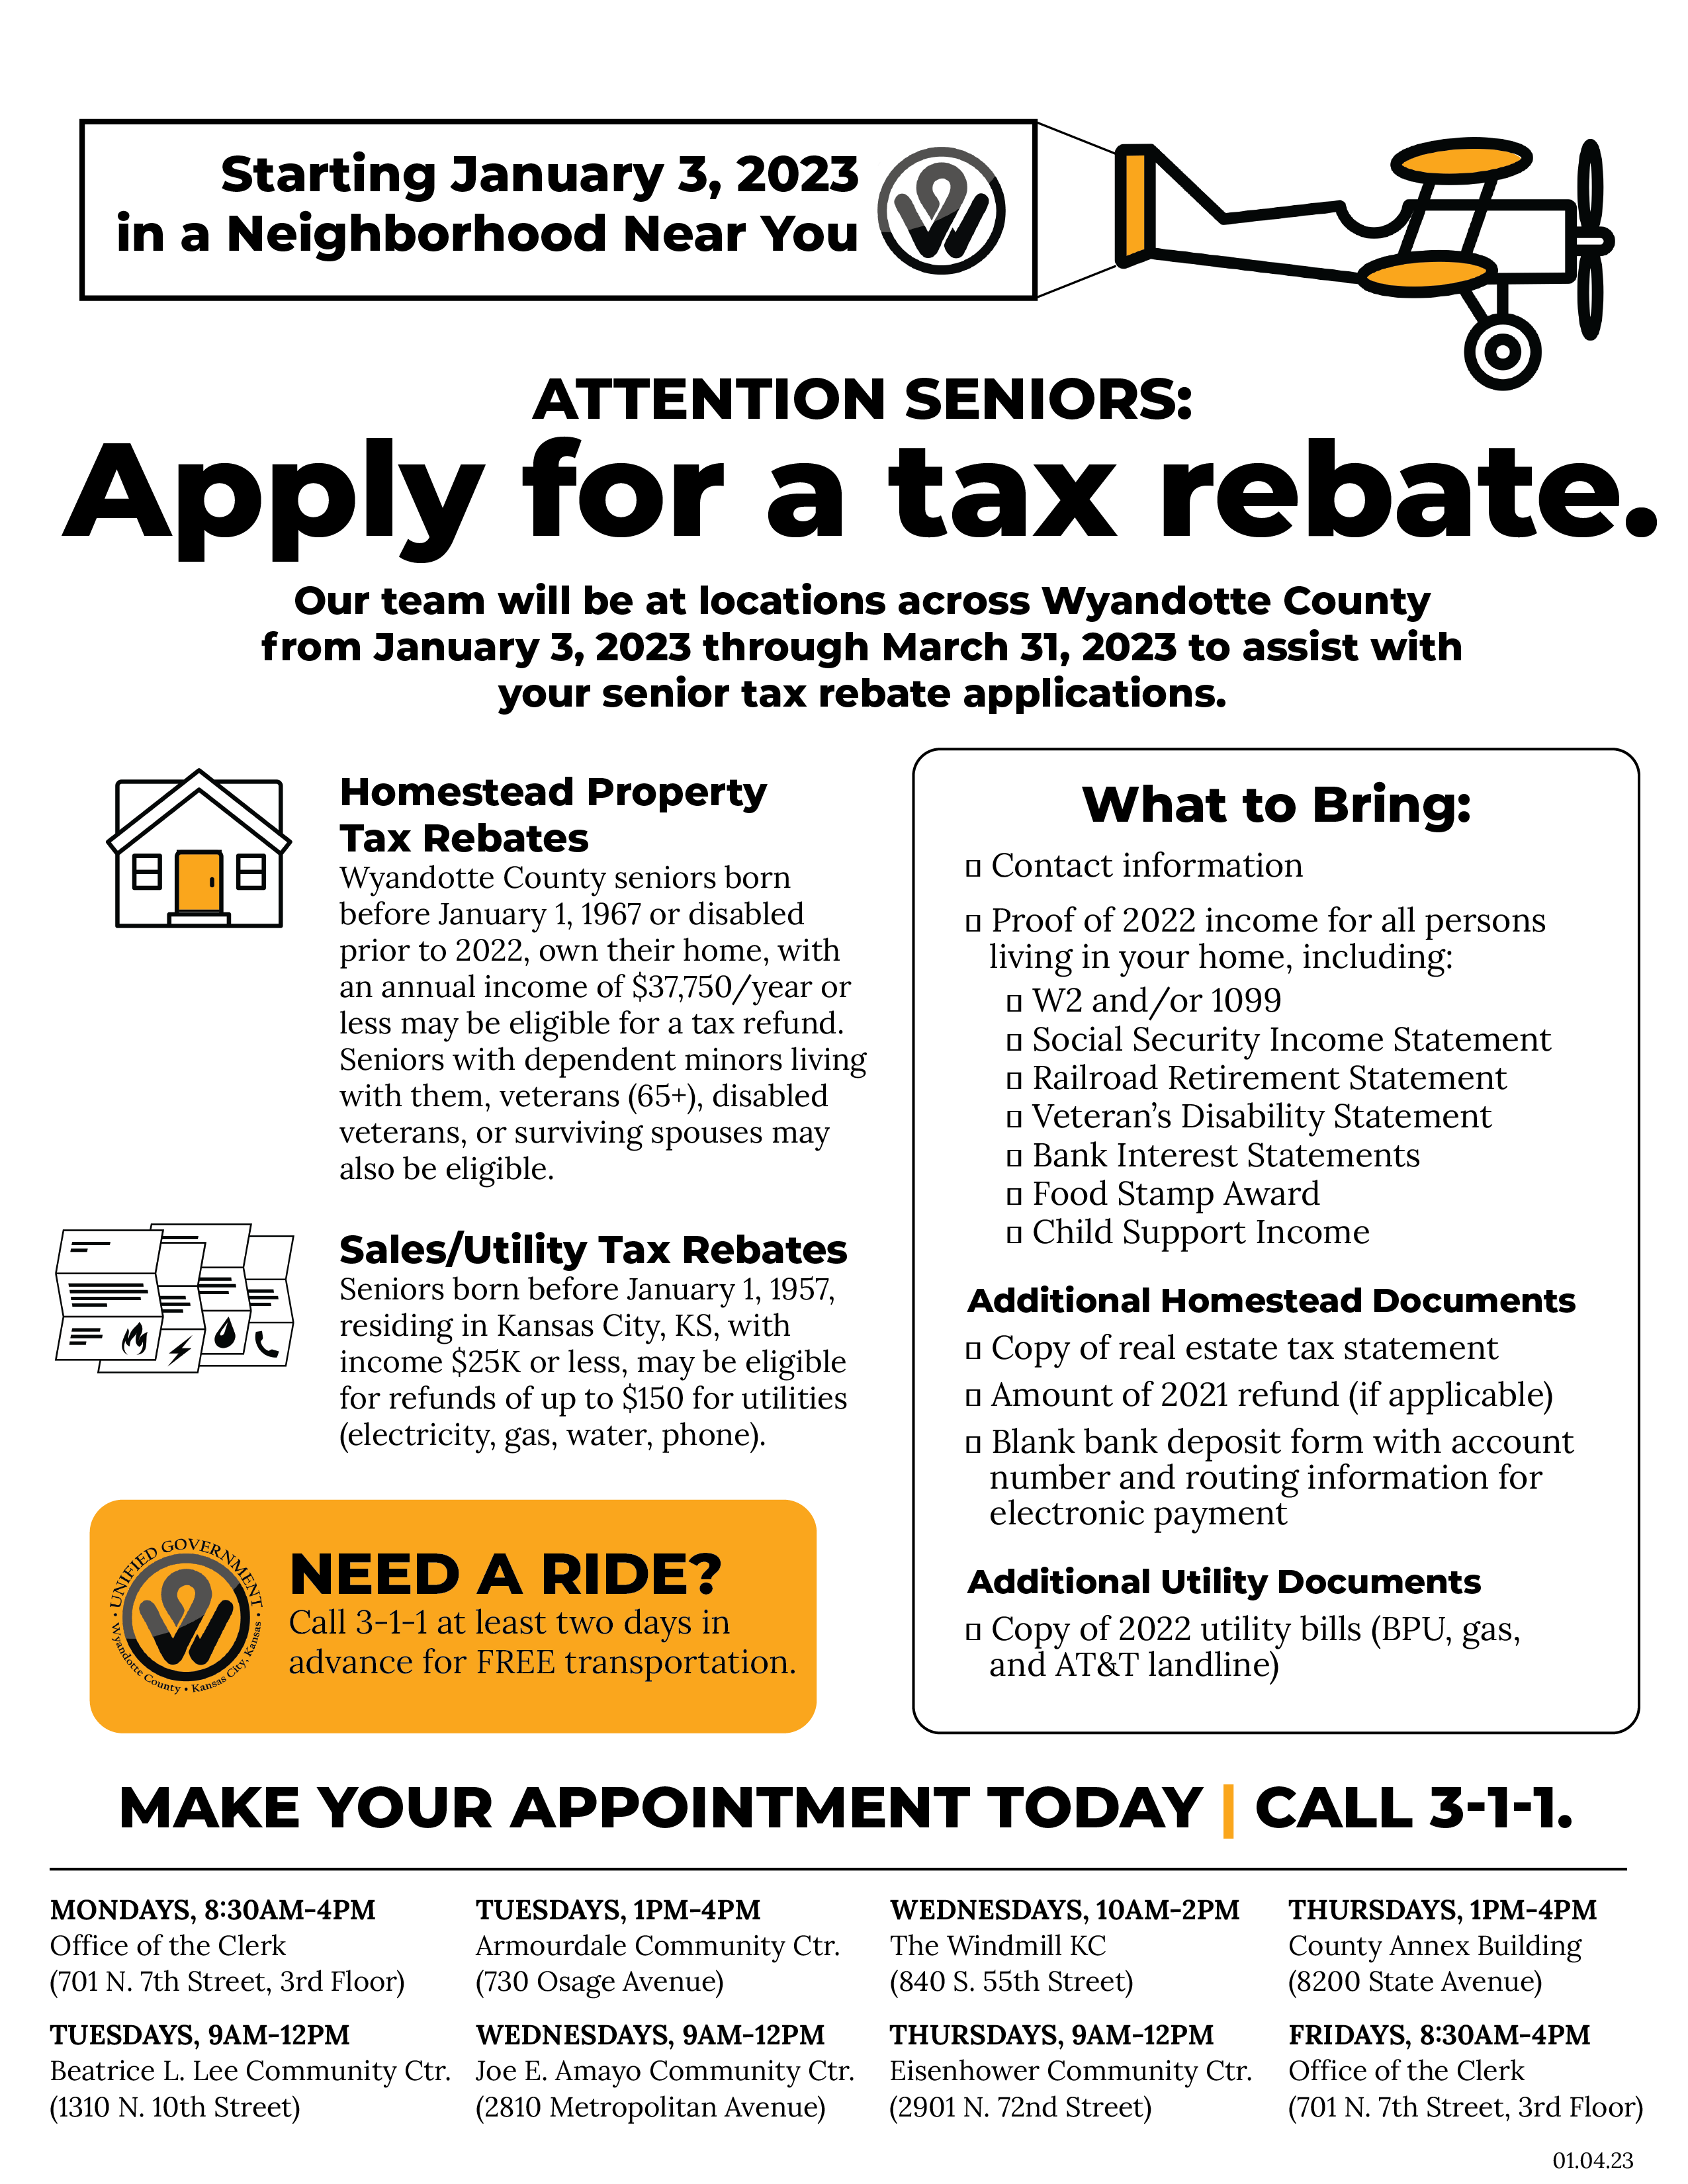 Starting Jan 3 in a neighborhood near you: senior tax rebate programs